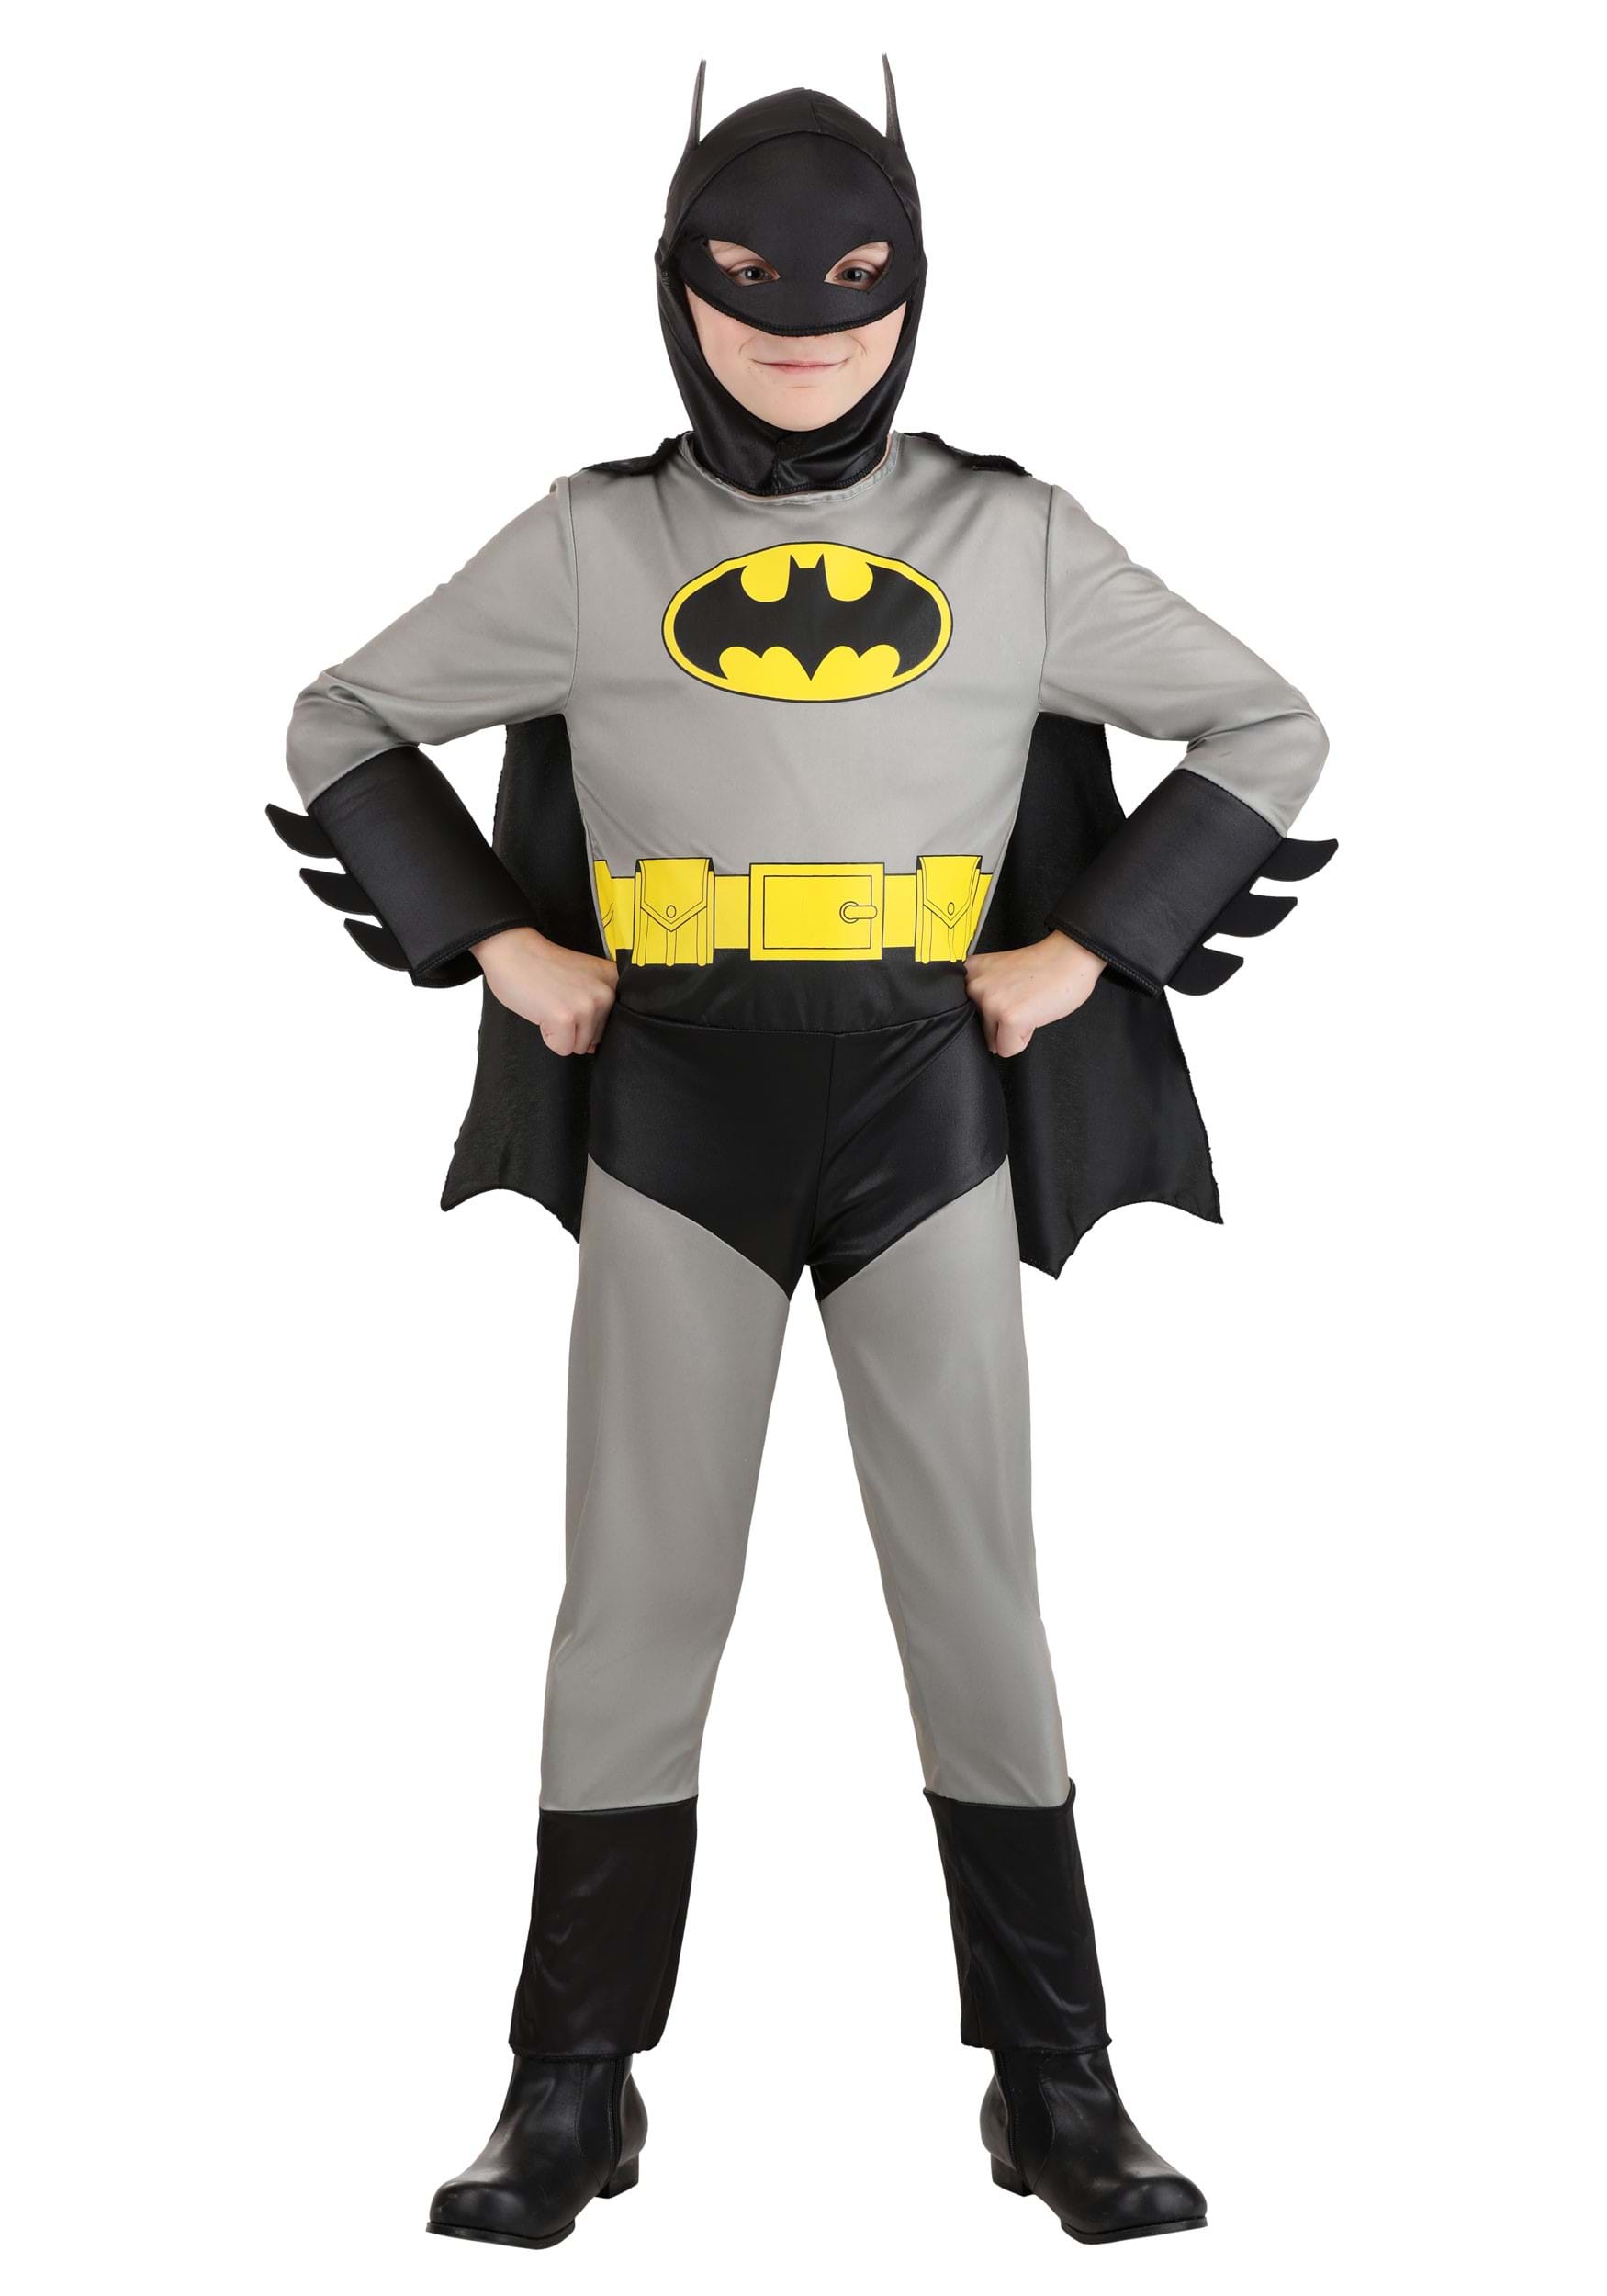 https://images.fun.com/products/74237/1-1/kids-classic-batman-costume.jpg